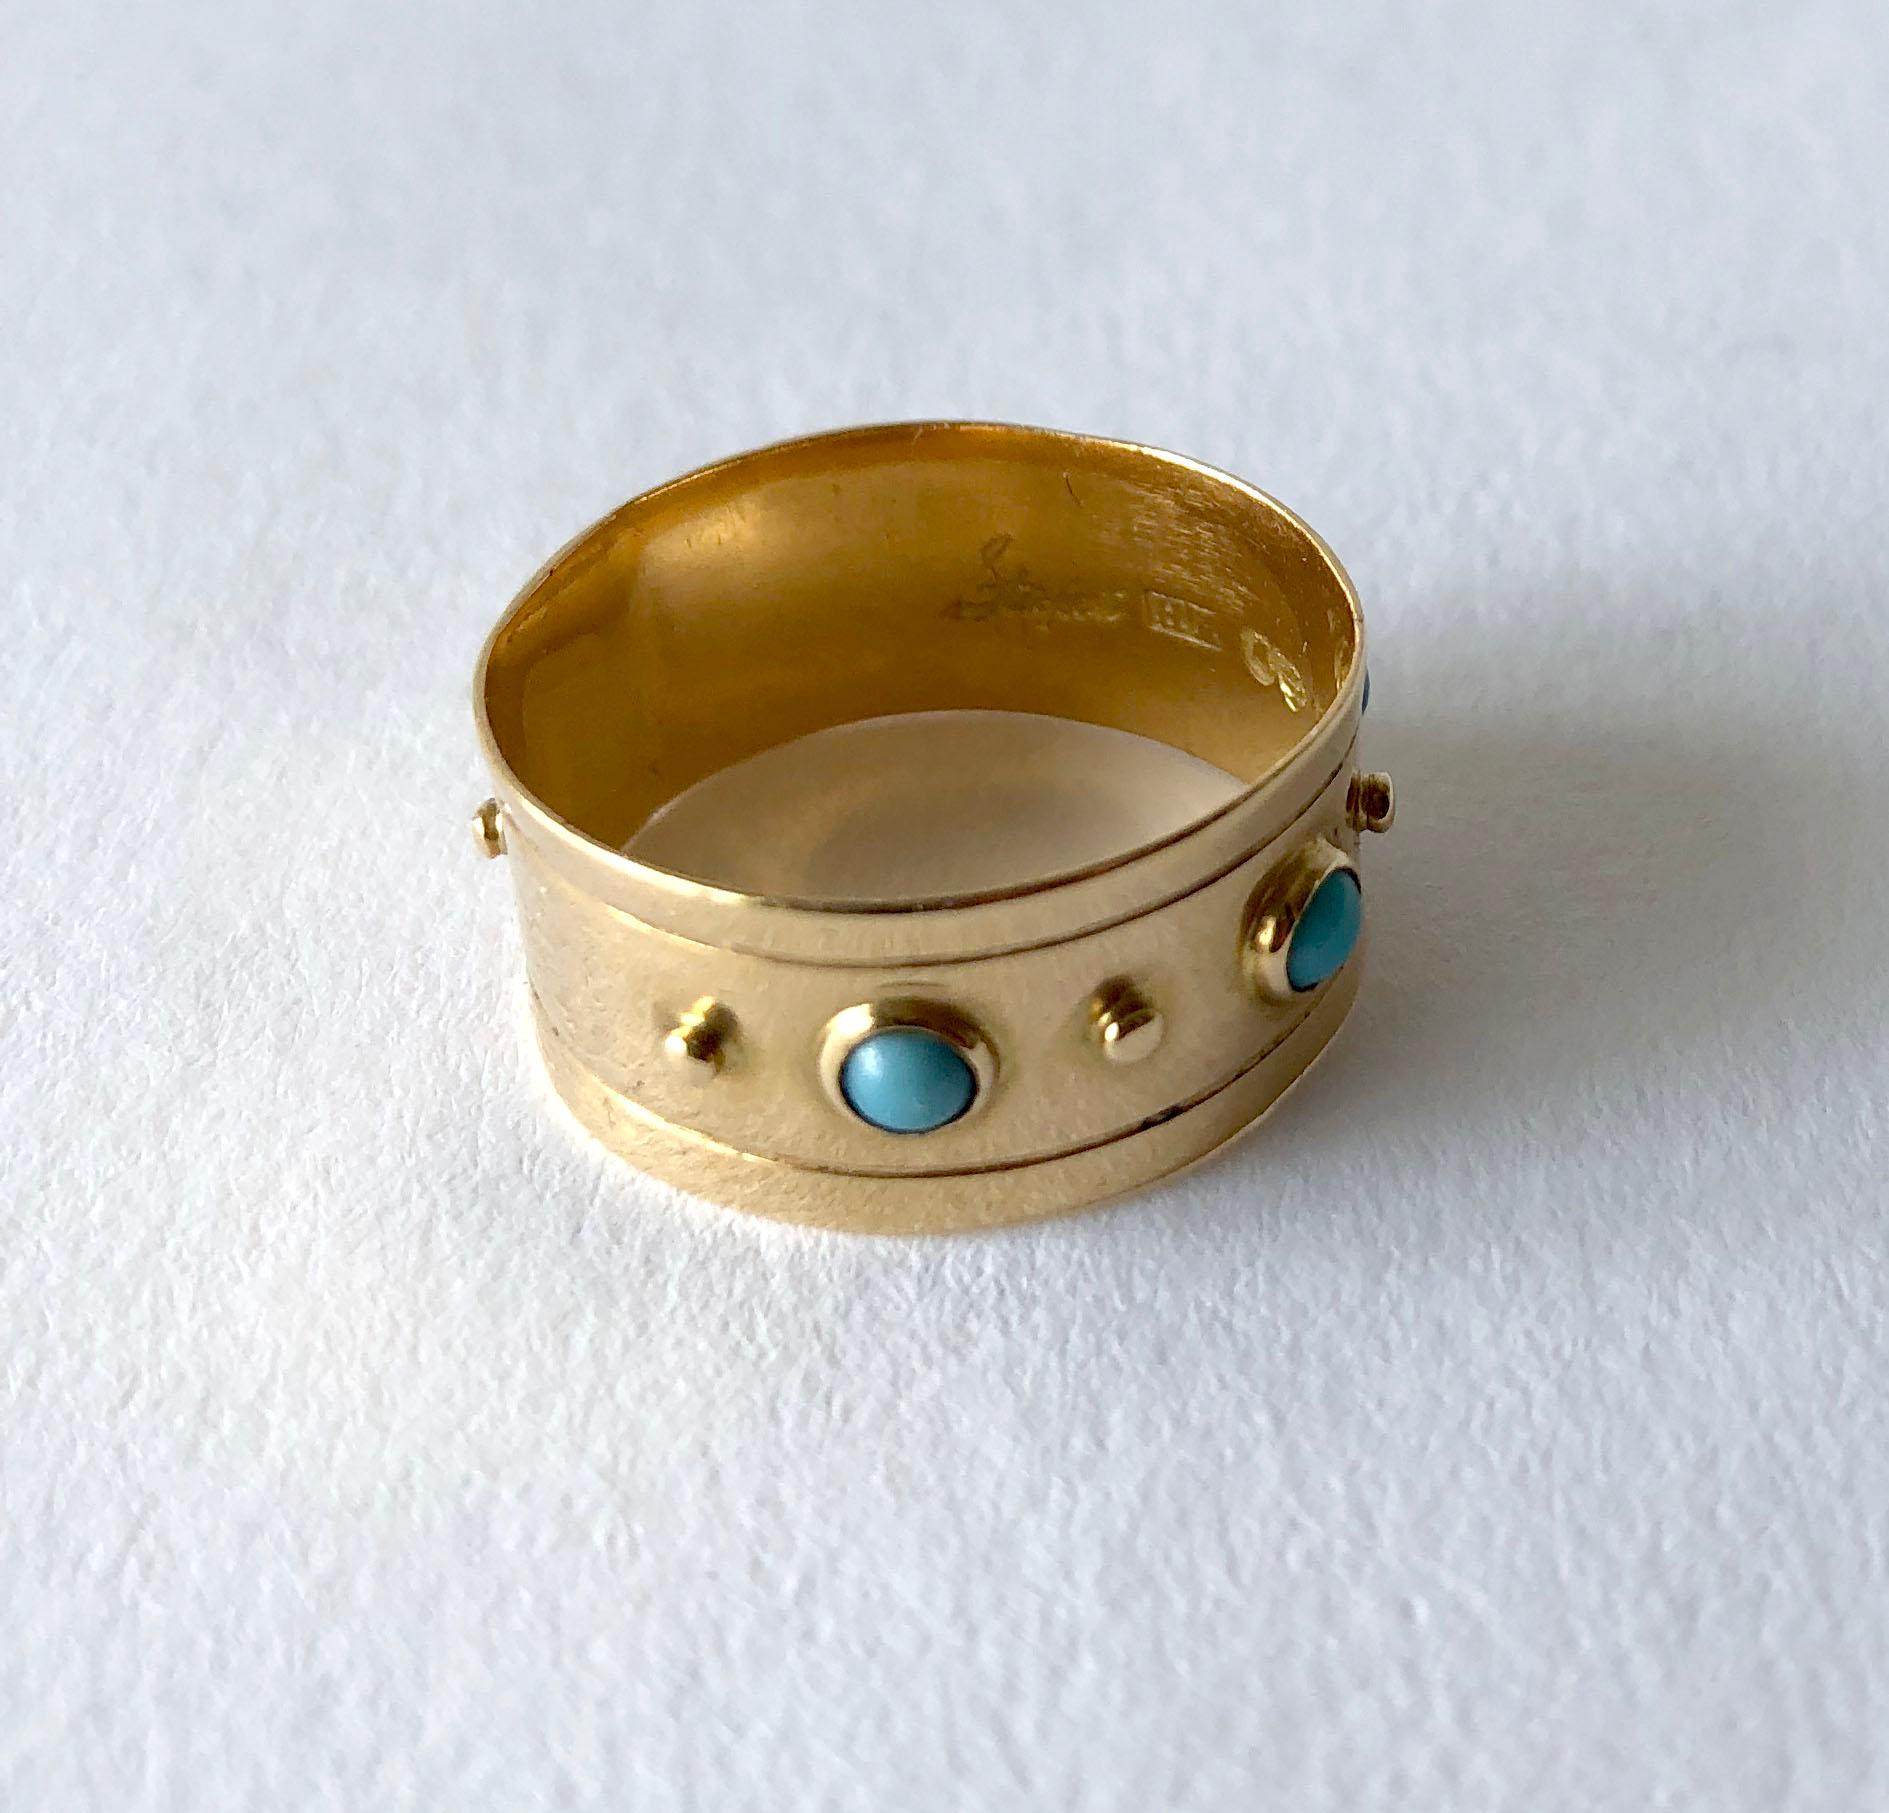 Modernist Stig Engelbert Stigbert 18 Karat Gold Turquoise Engagement or Wedding Band Ring